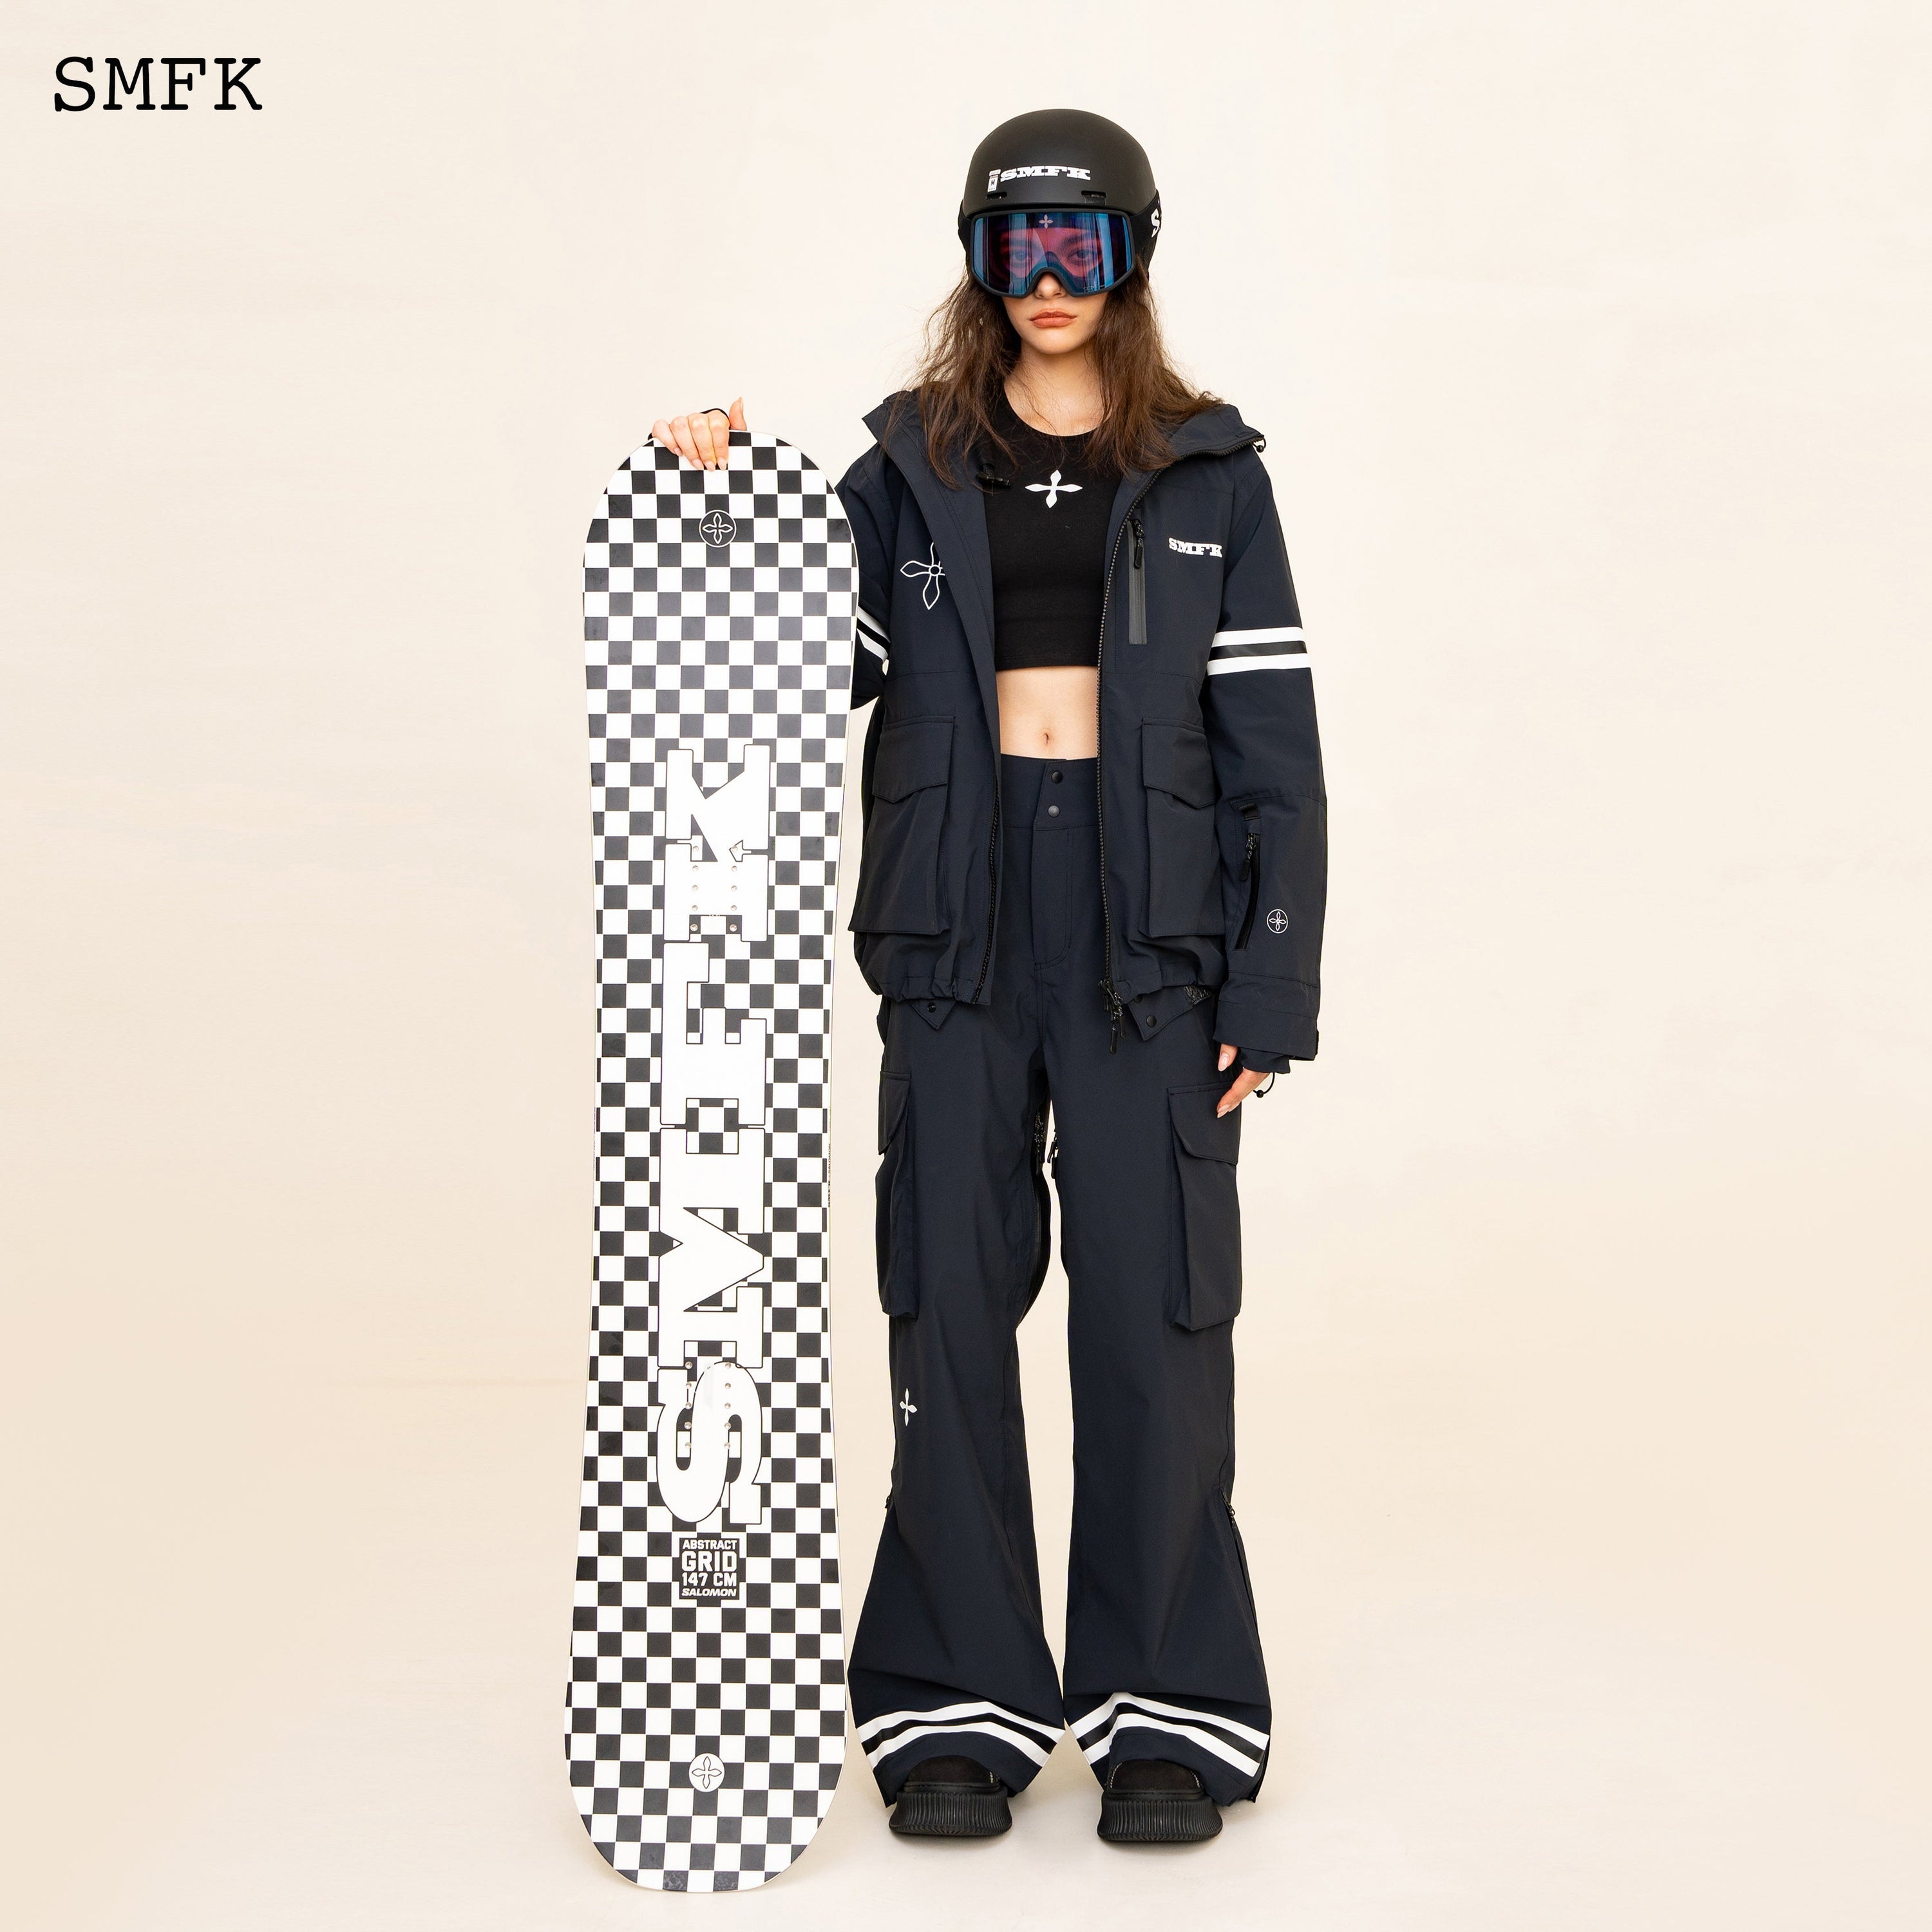 (ABSTRACT) GRID-SMFK X SALOMON Snow Board - SMFK Official